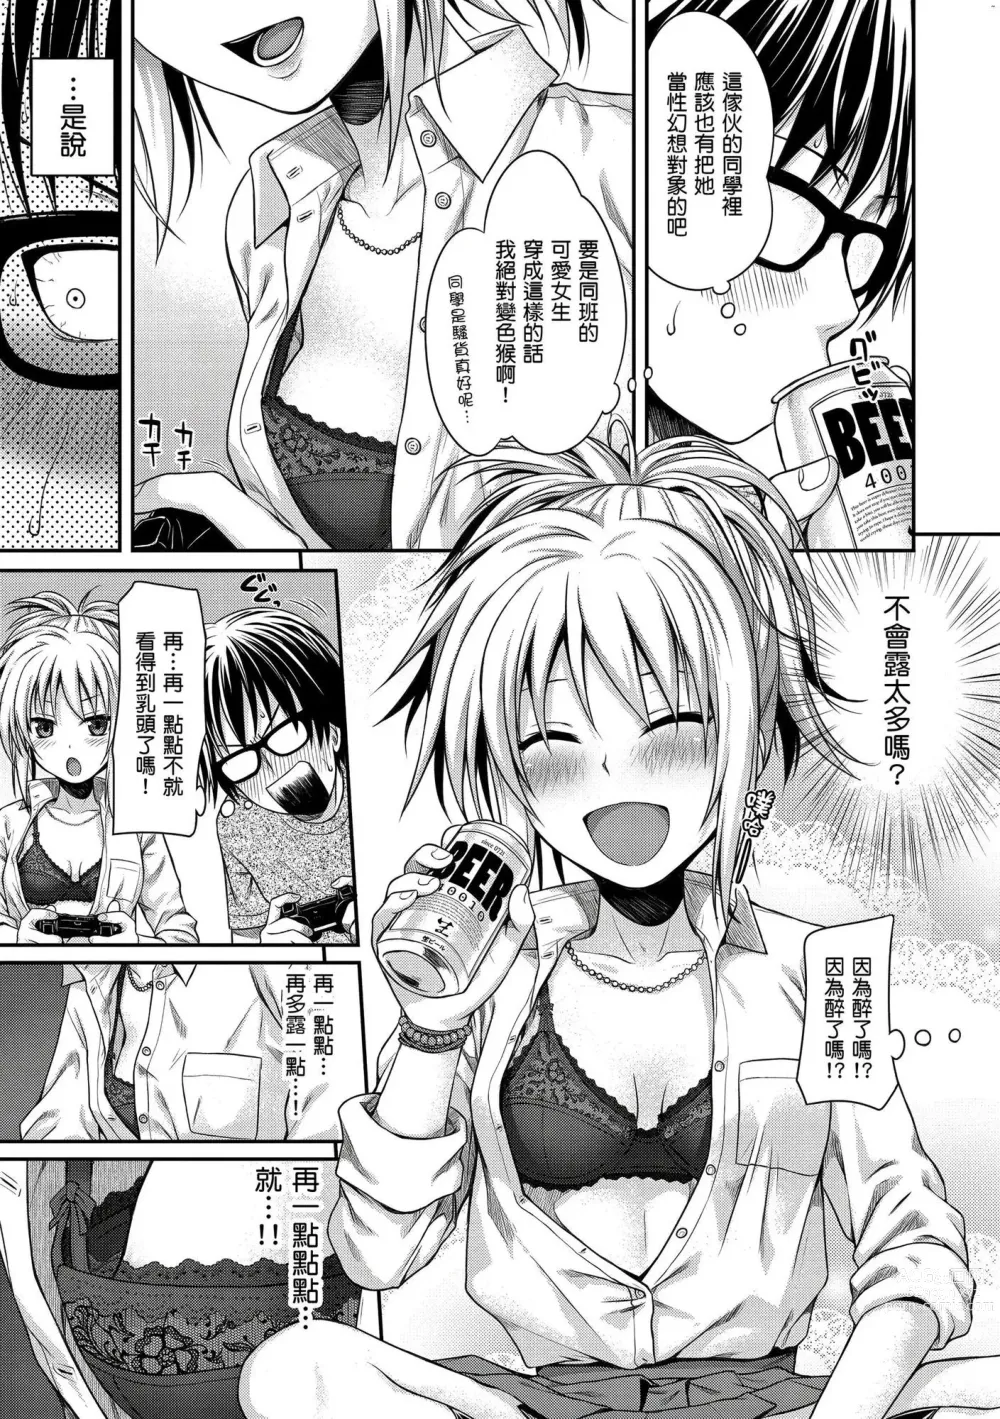 Page 7 of manga 偷偷插入 (decensored)